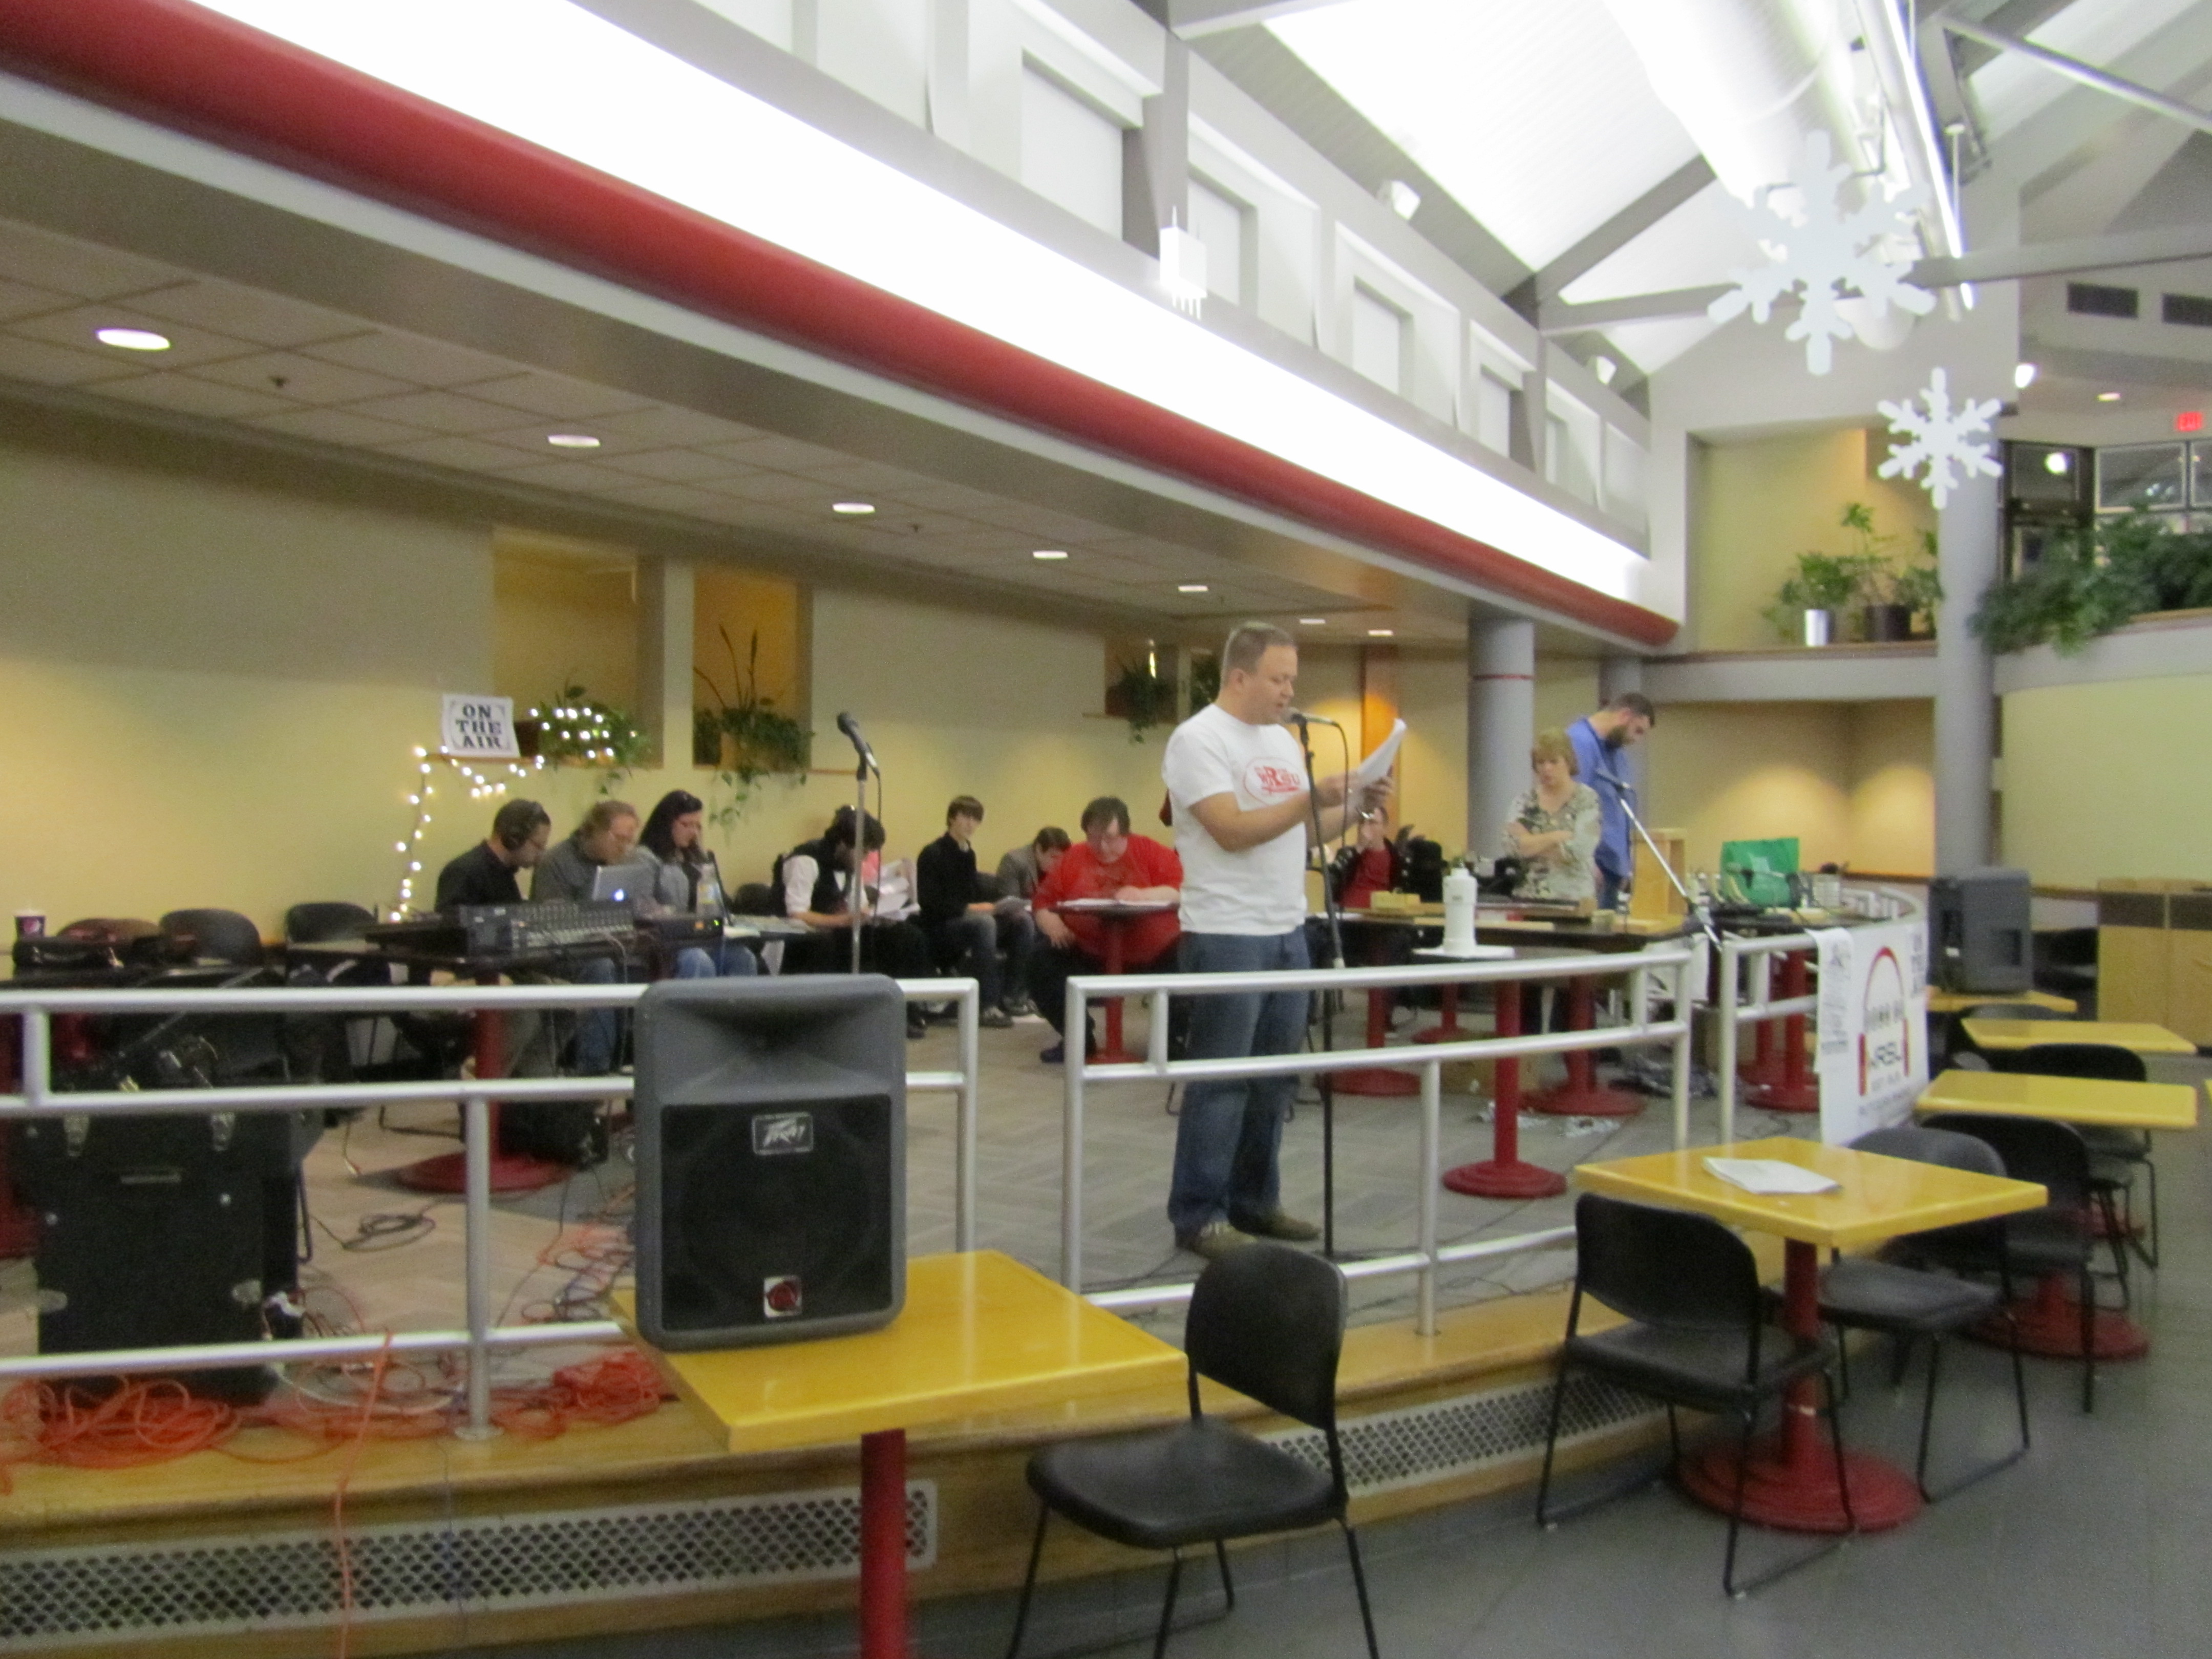 2010 - WRSU Presents A Christmas Carol<br>Live from the Rutgers Student Center Atrium